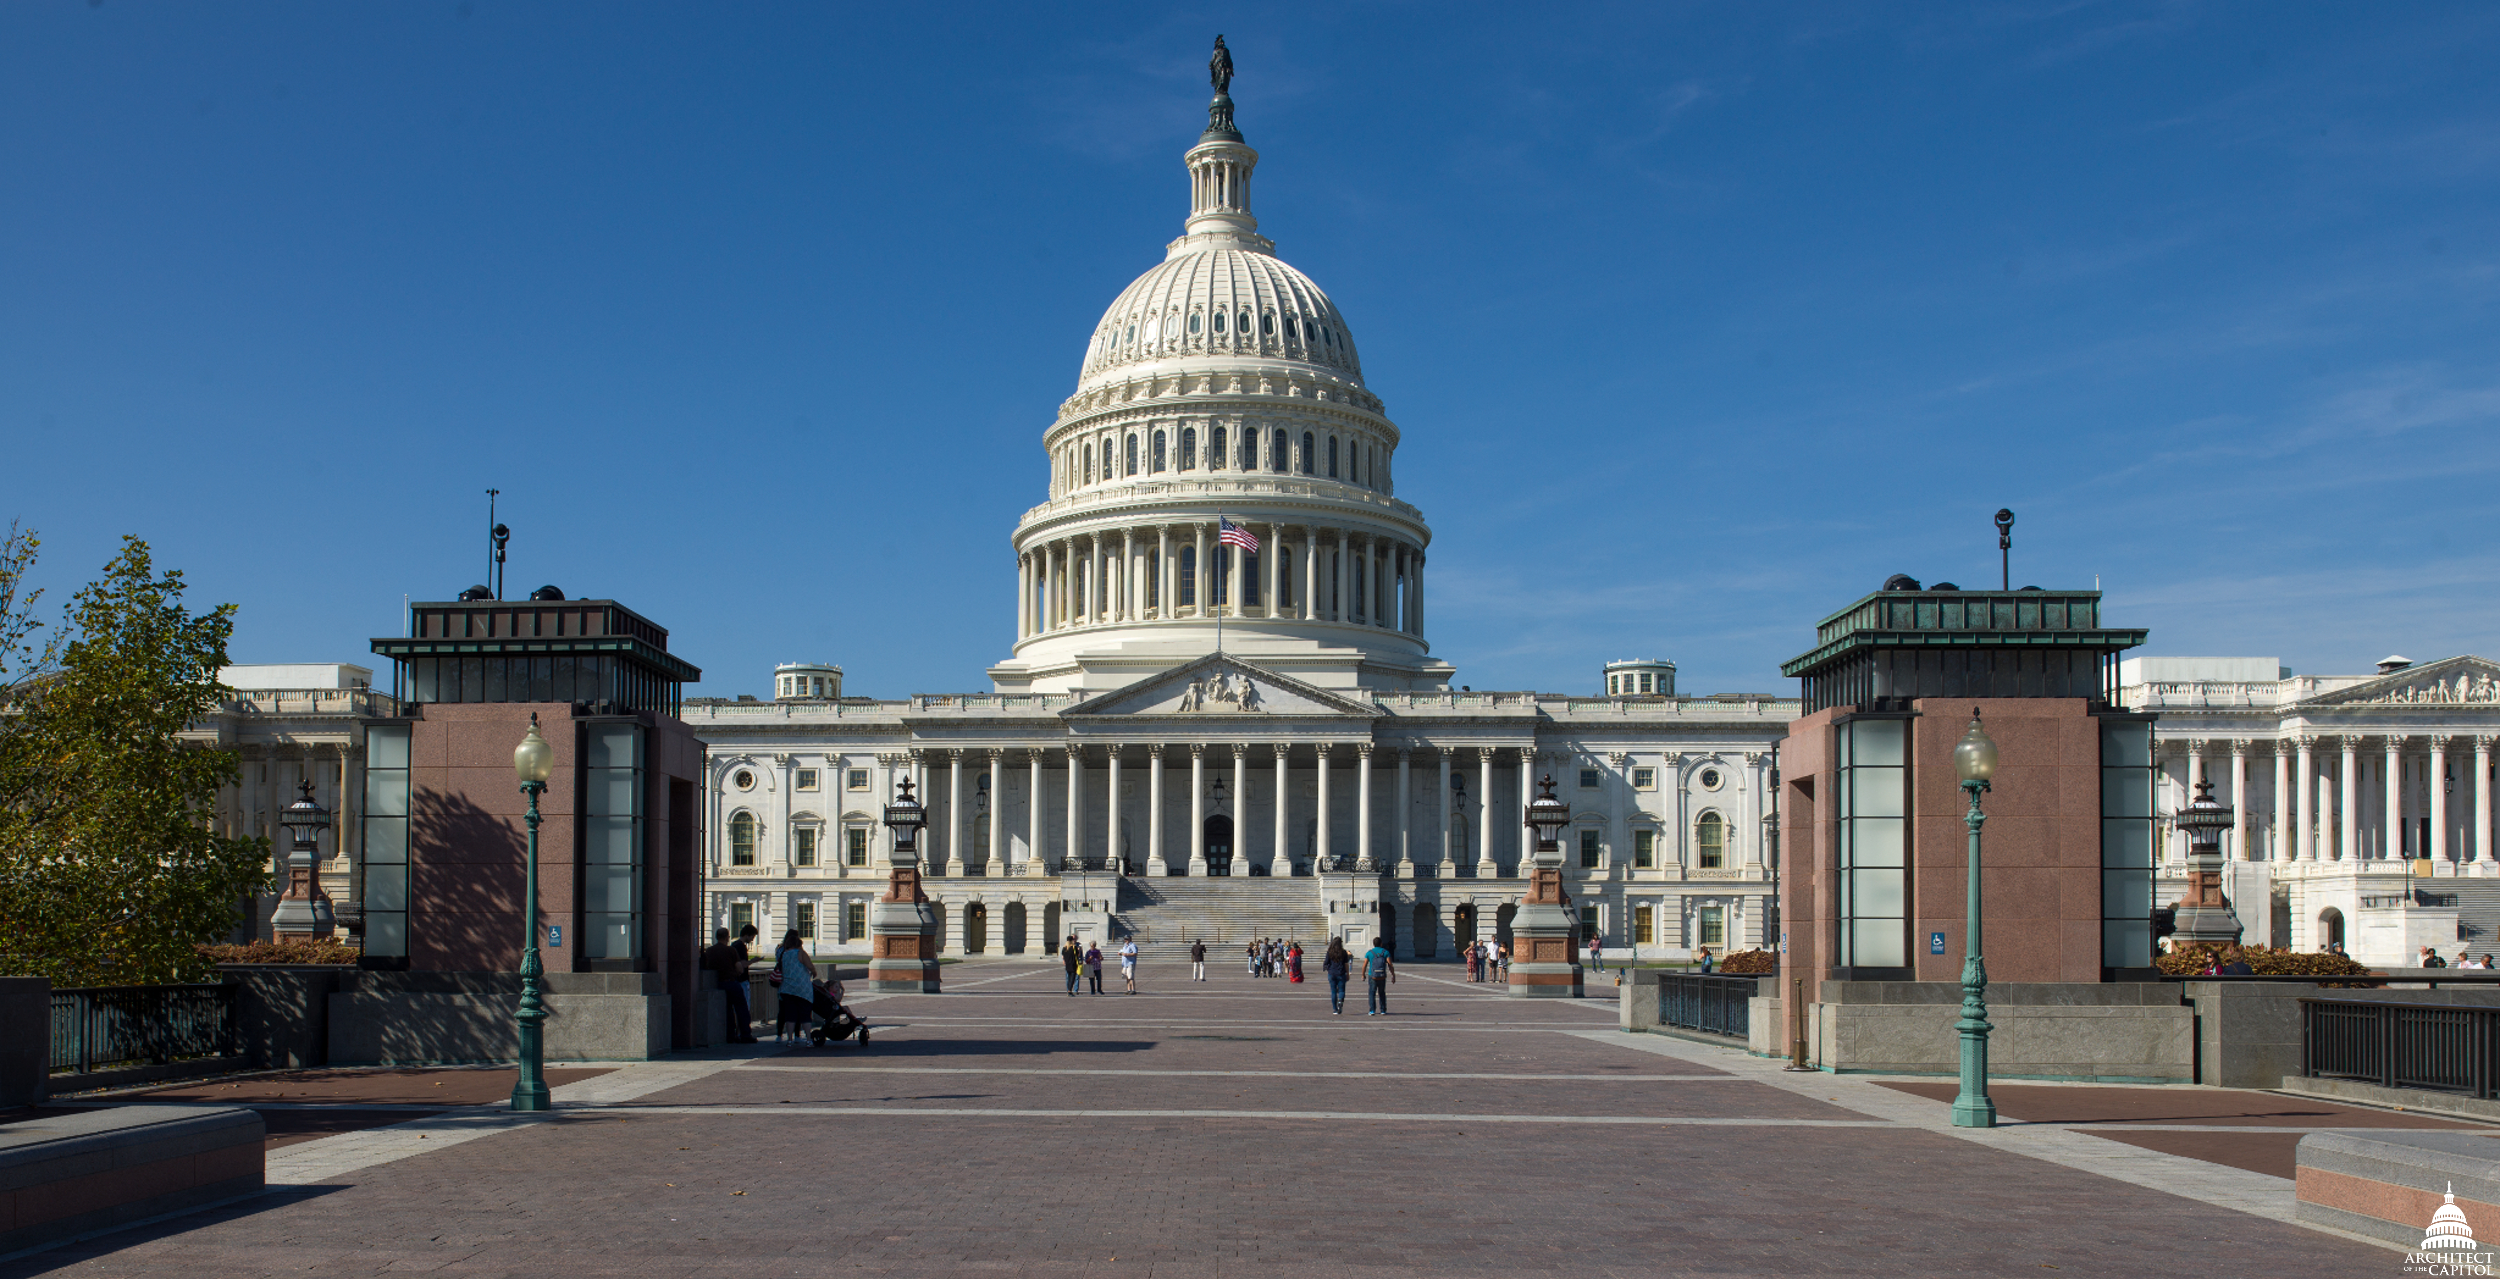 The U.S. Capitol in Washington on Oct. 18, 2016.